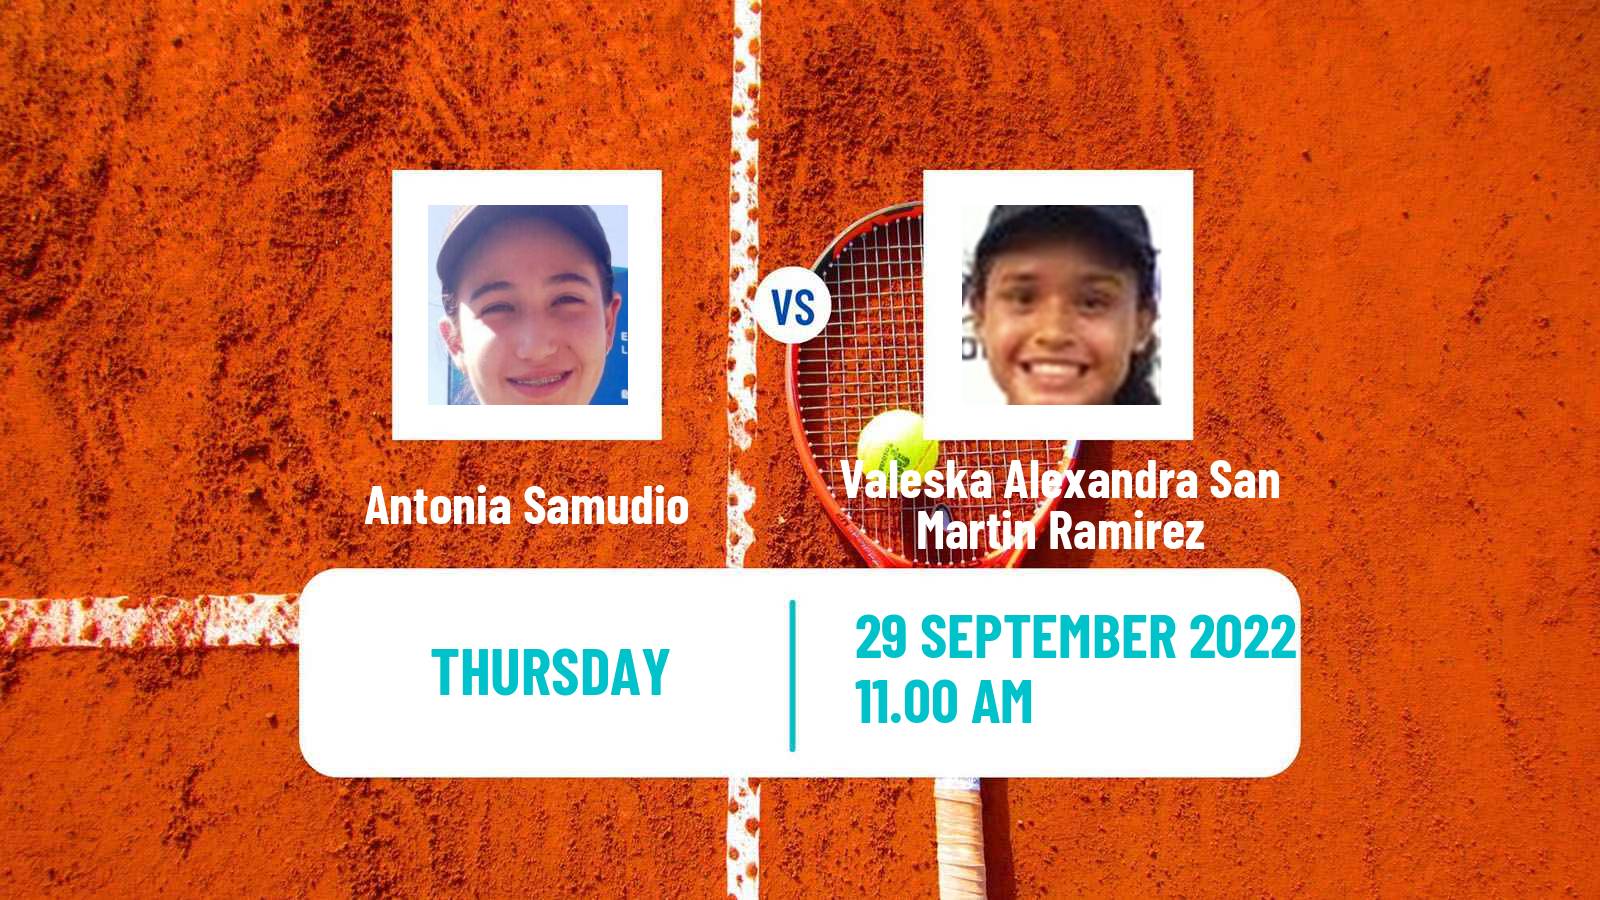 Tennis ITF Tournaments Antonia Samudio - Valeska Alexandra San Martin Ramirez